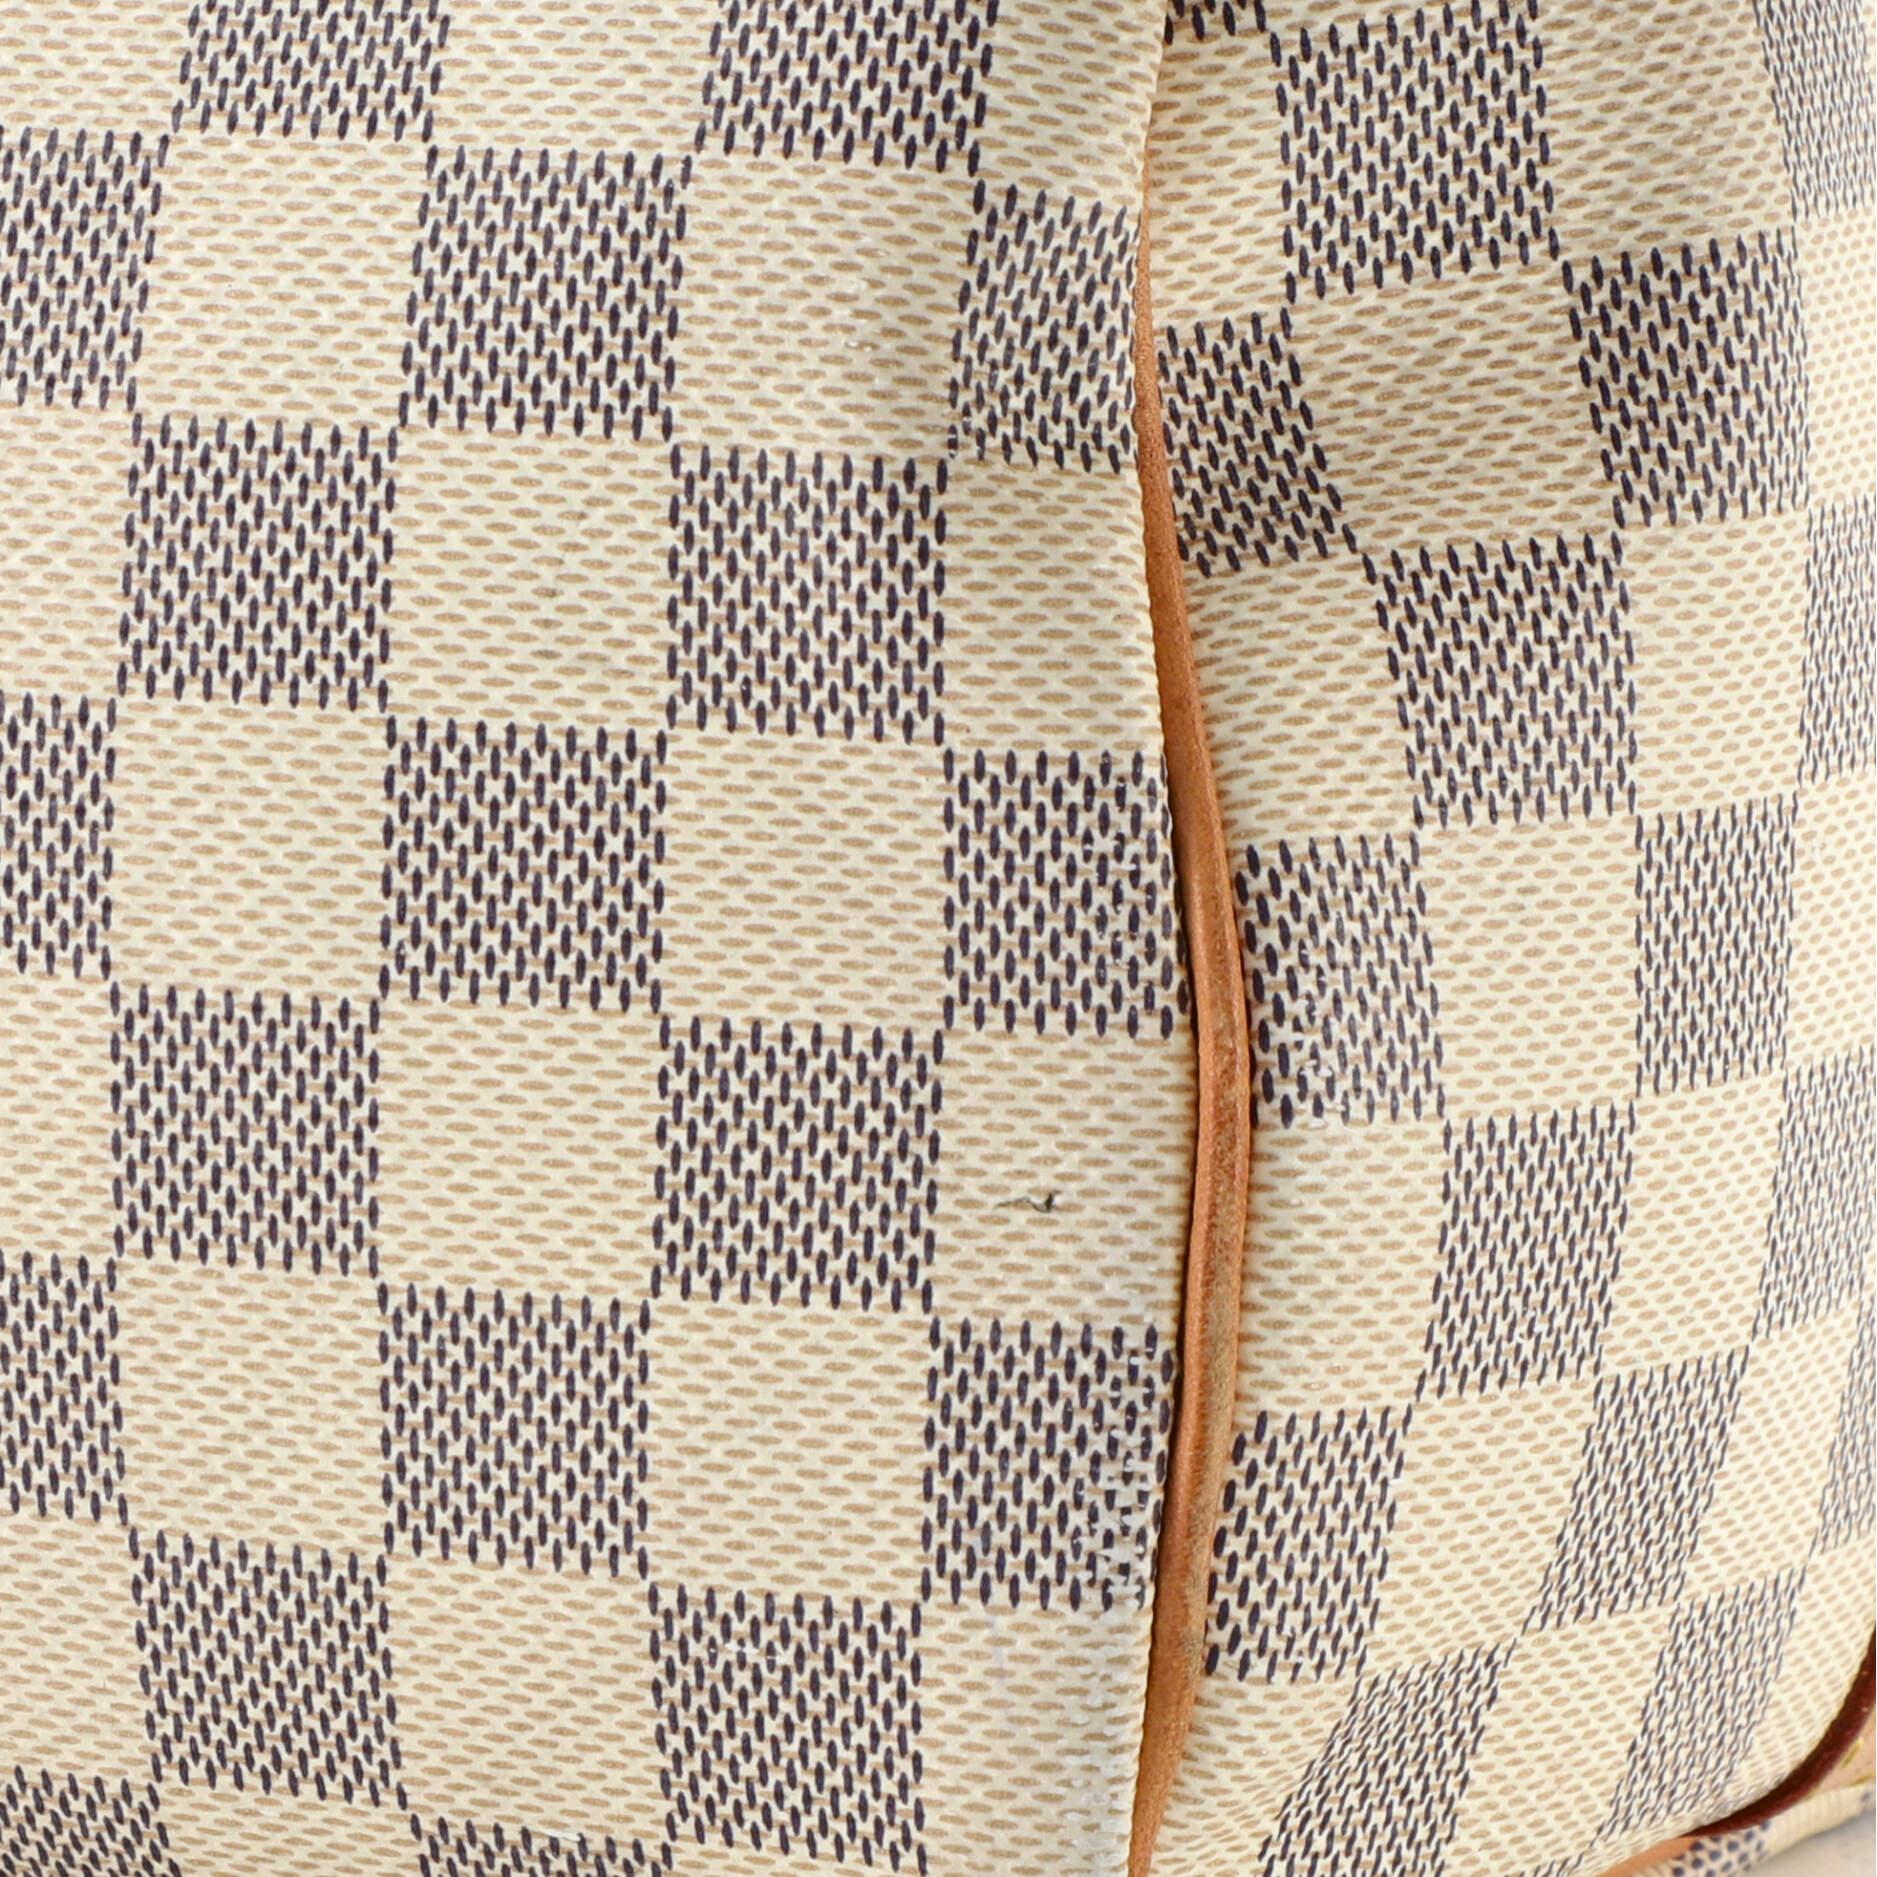 Louis Vuitton Speedy Bandouliere Bag Damier 30 1